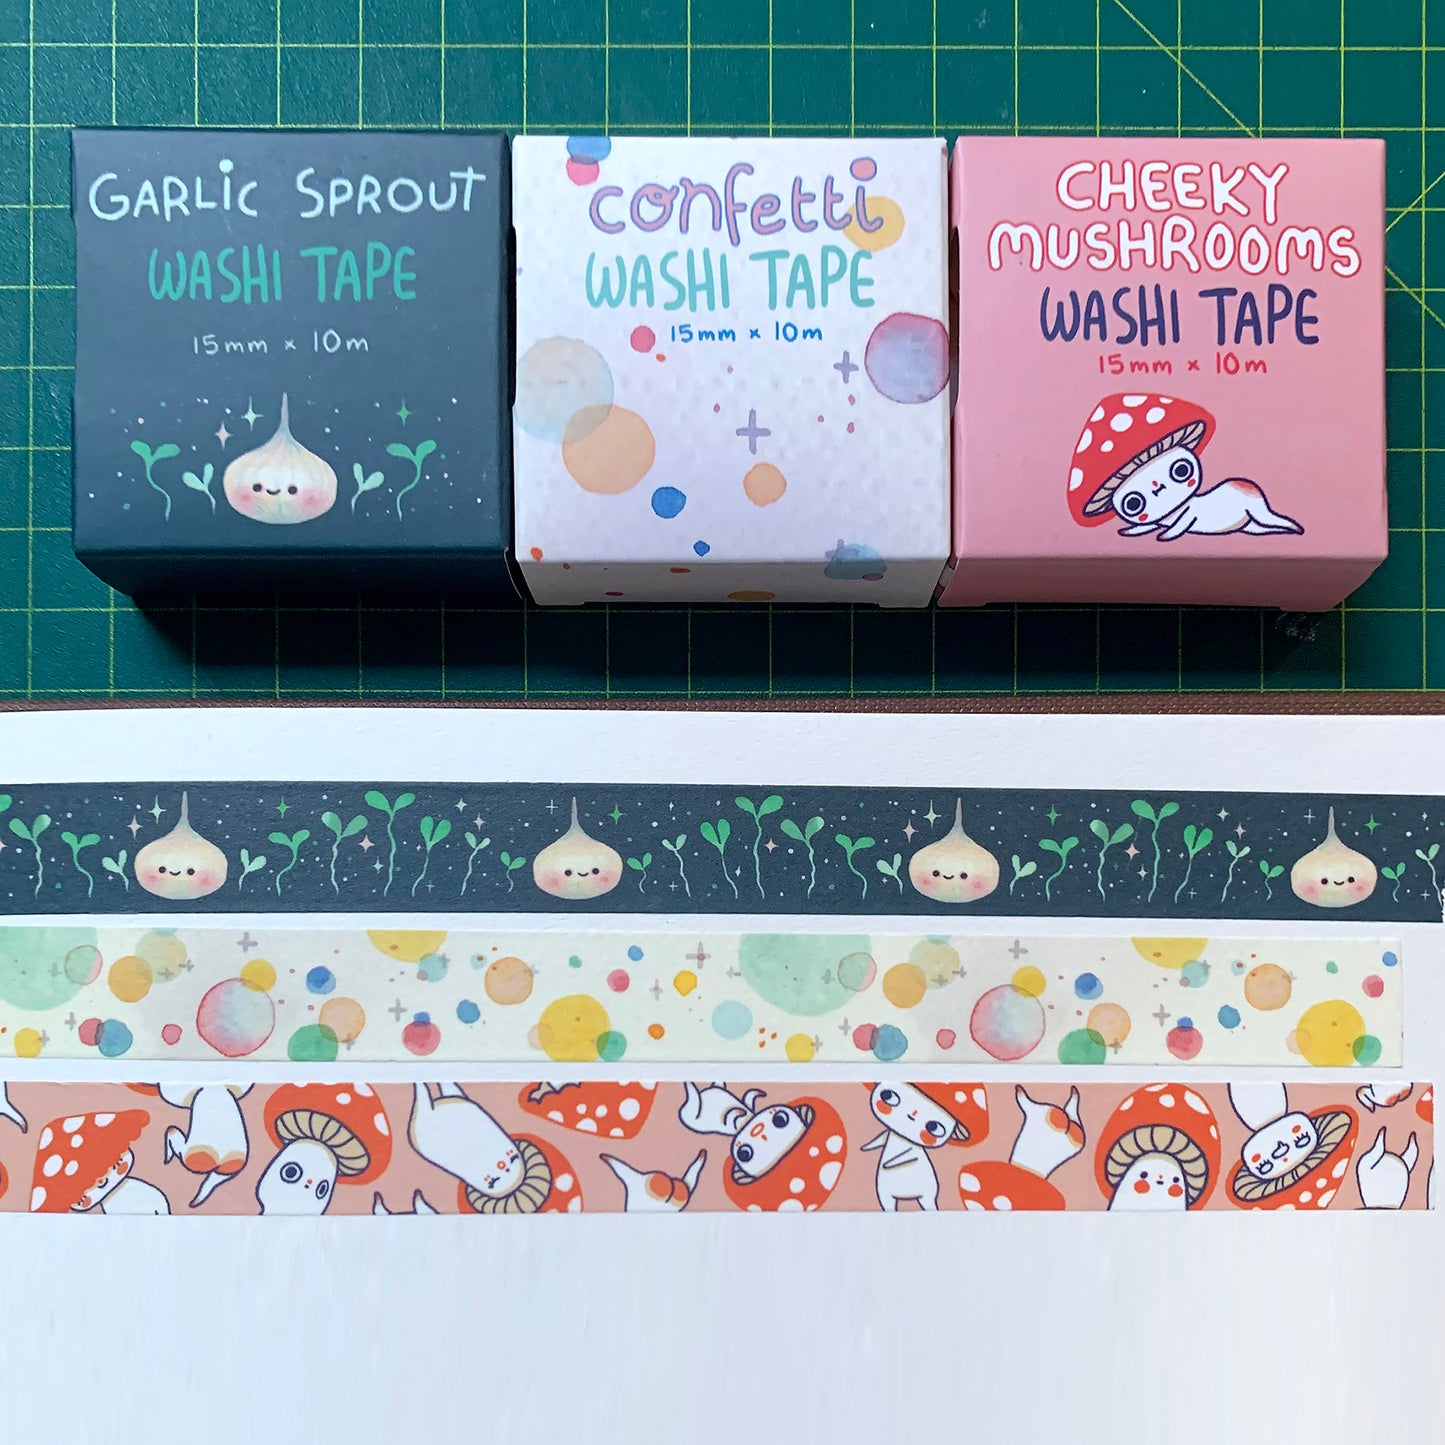 Cheeky Mushrooms - Washi Tape